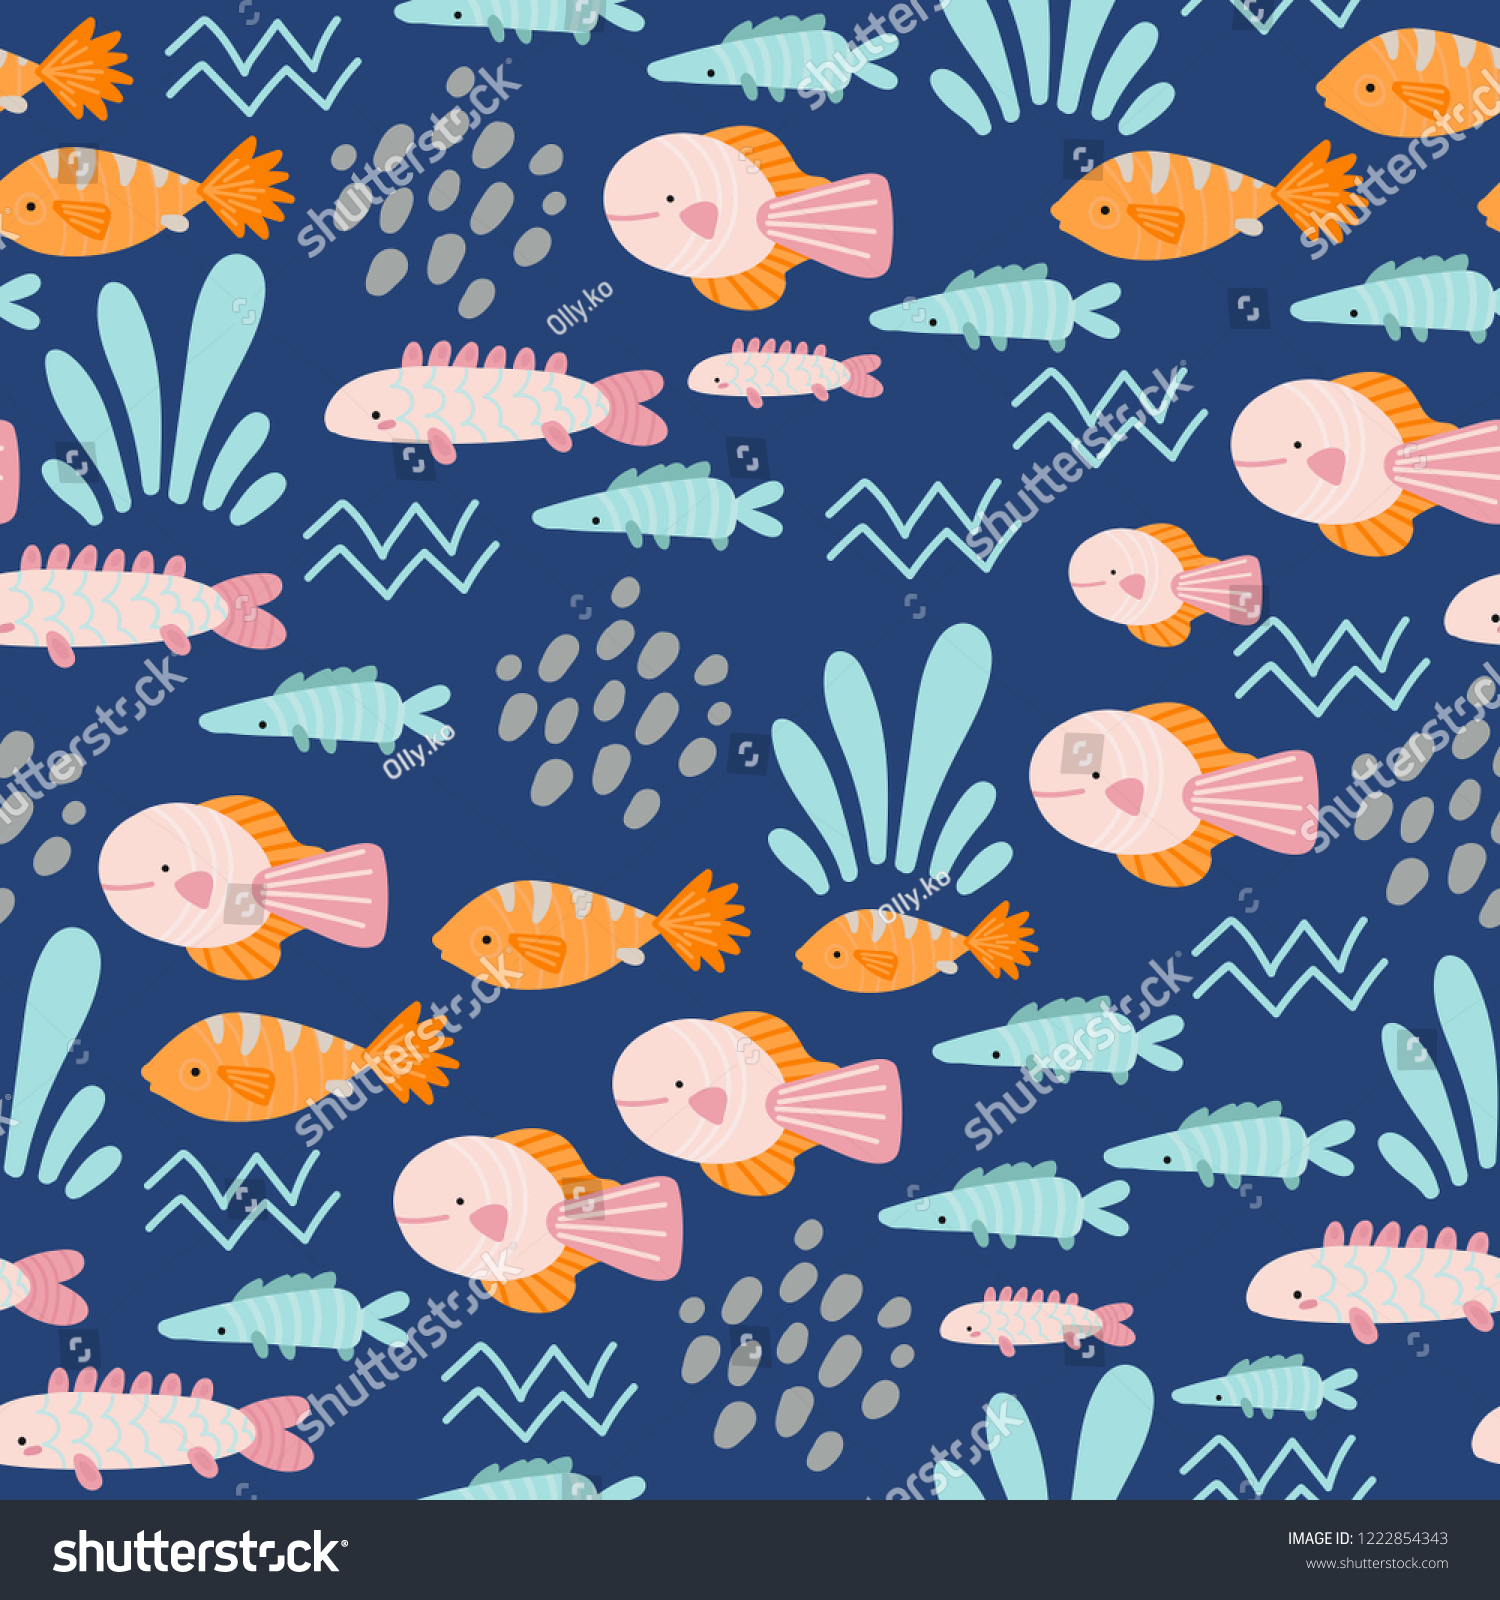 25+] Cute Cartoon Fish Wallpapers - WallpaperSafari